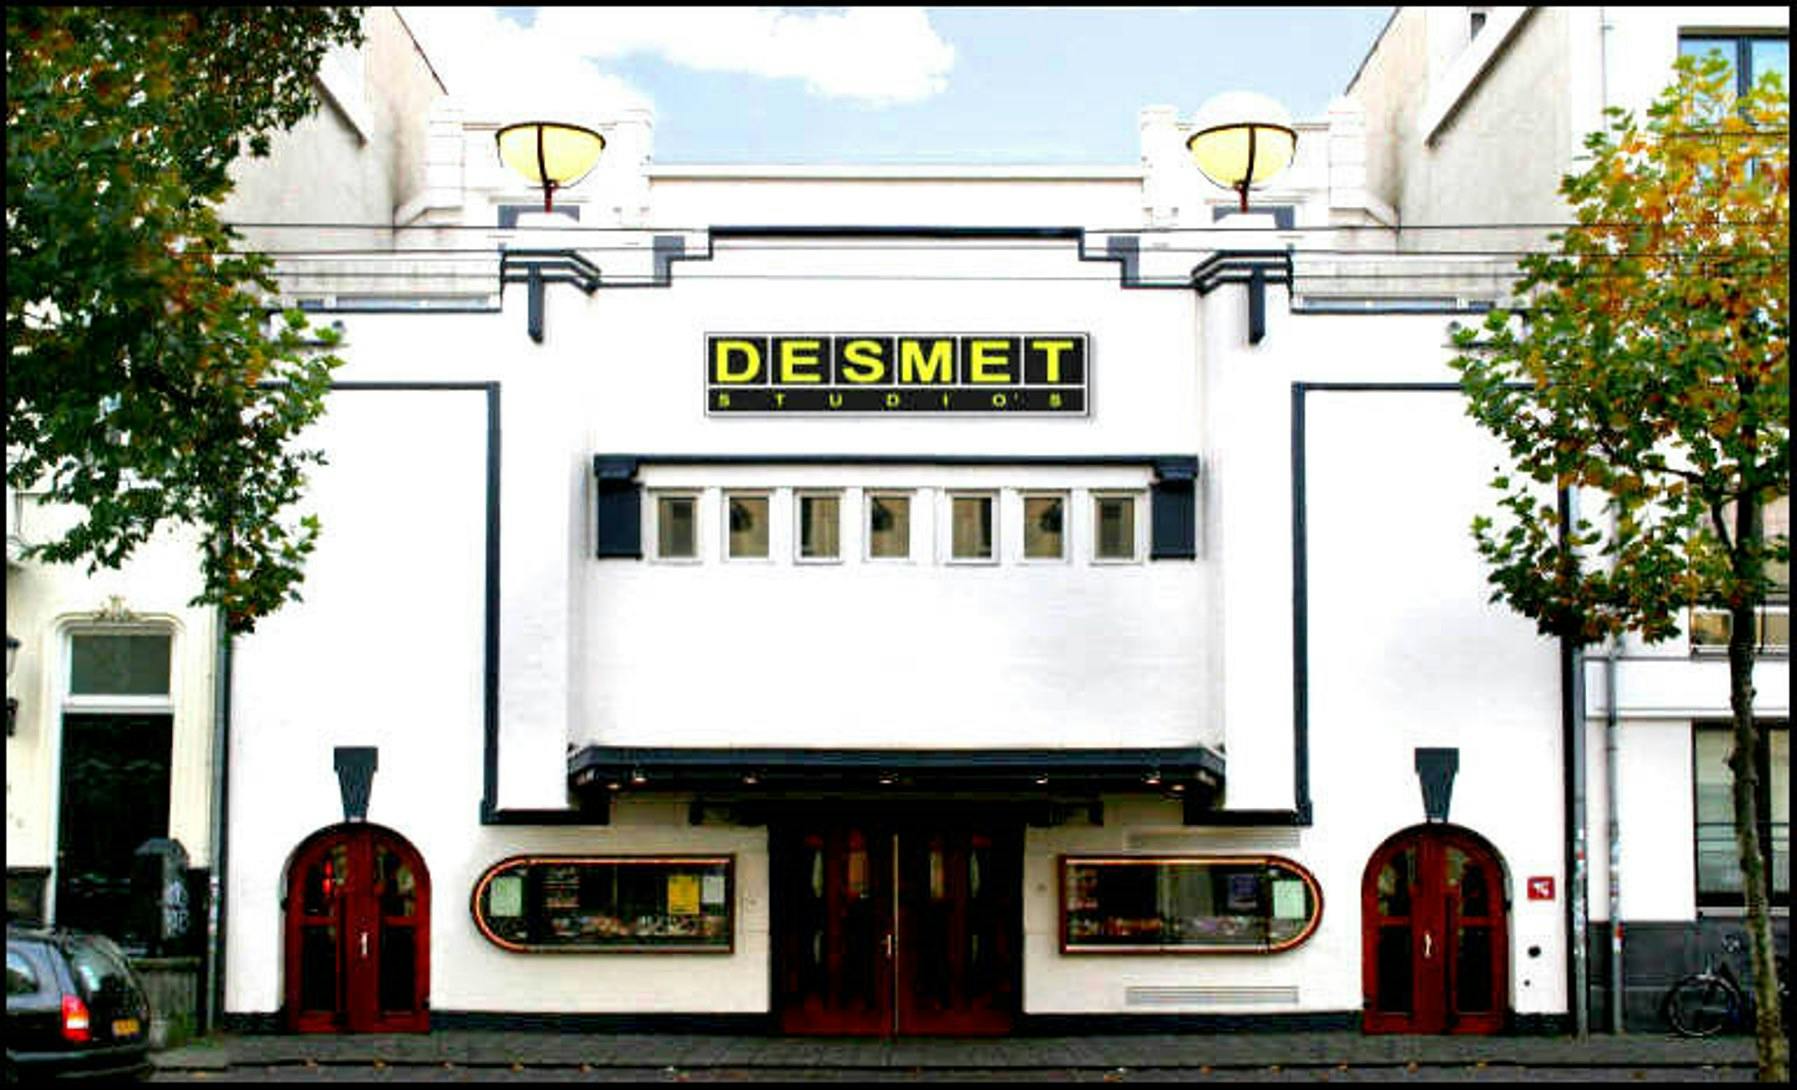 Desmet Studio's